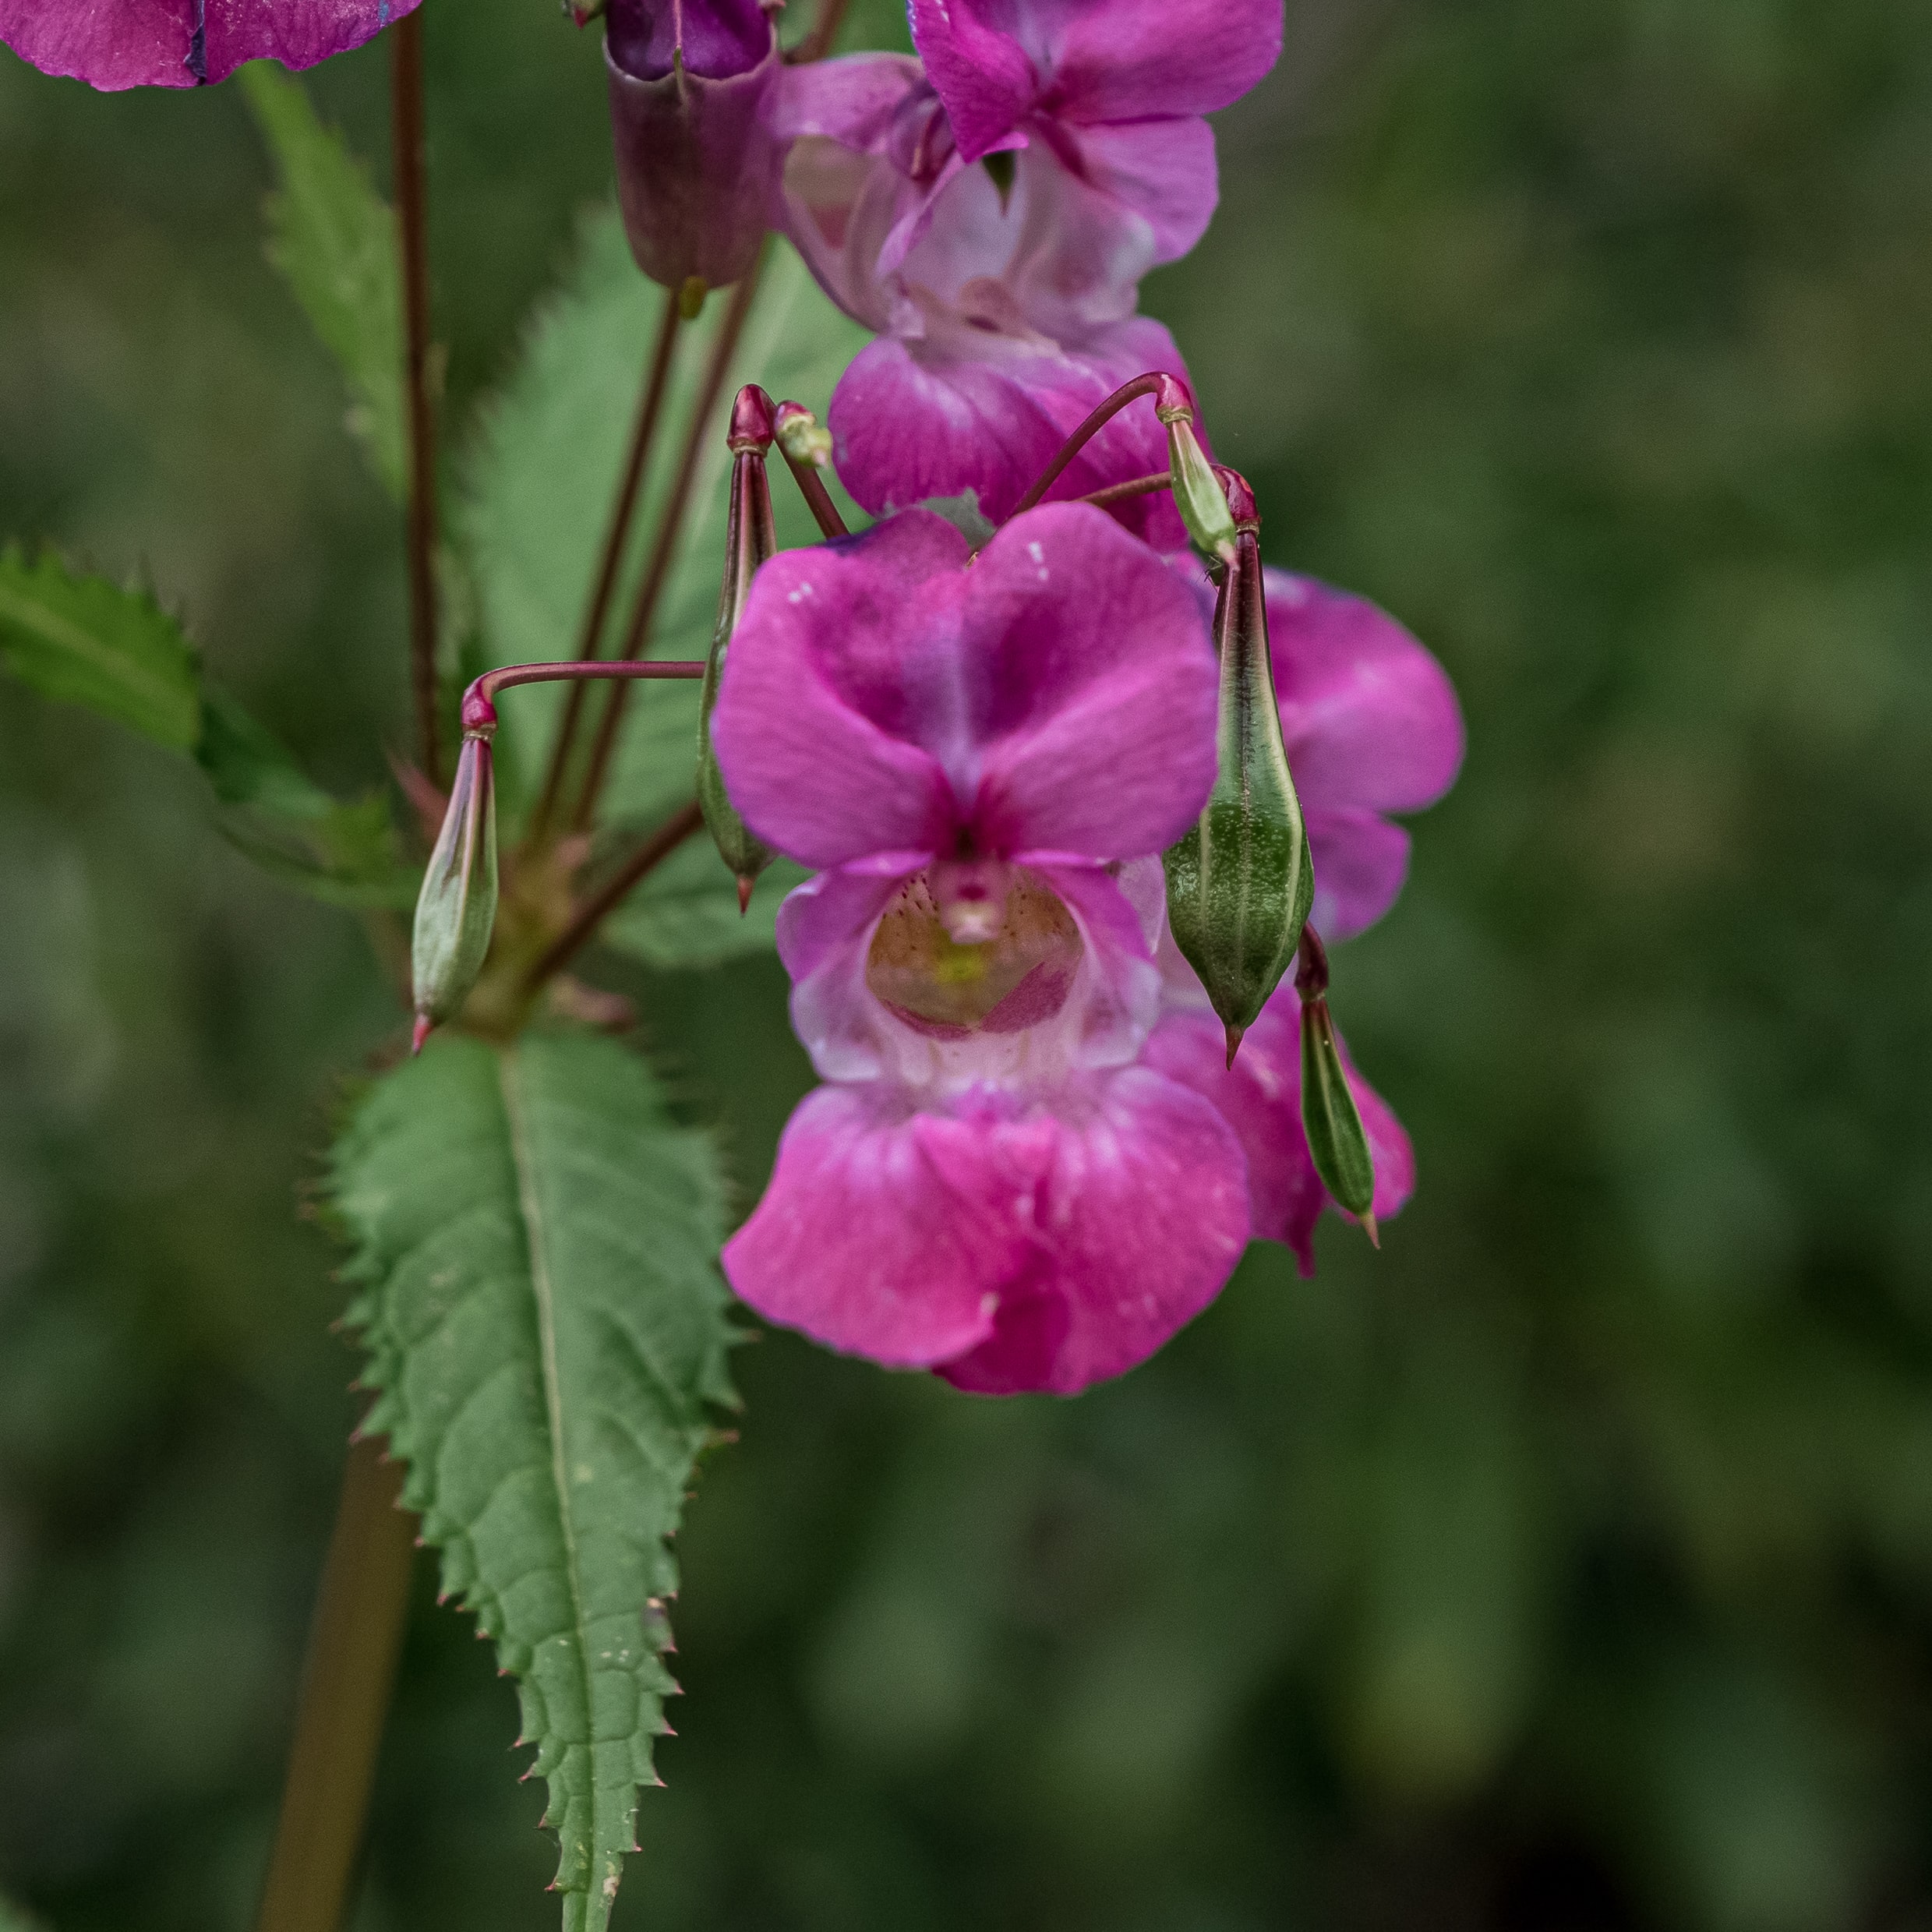 Close up of a Himalayan balsam flower